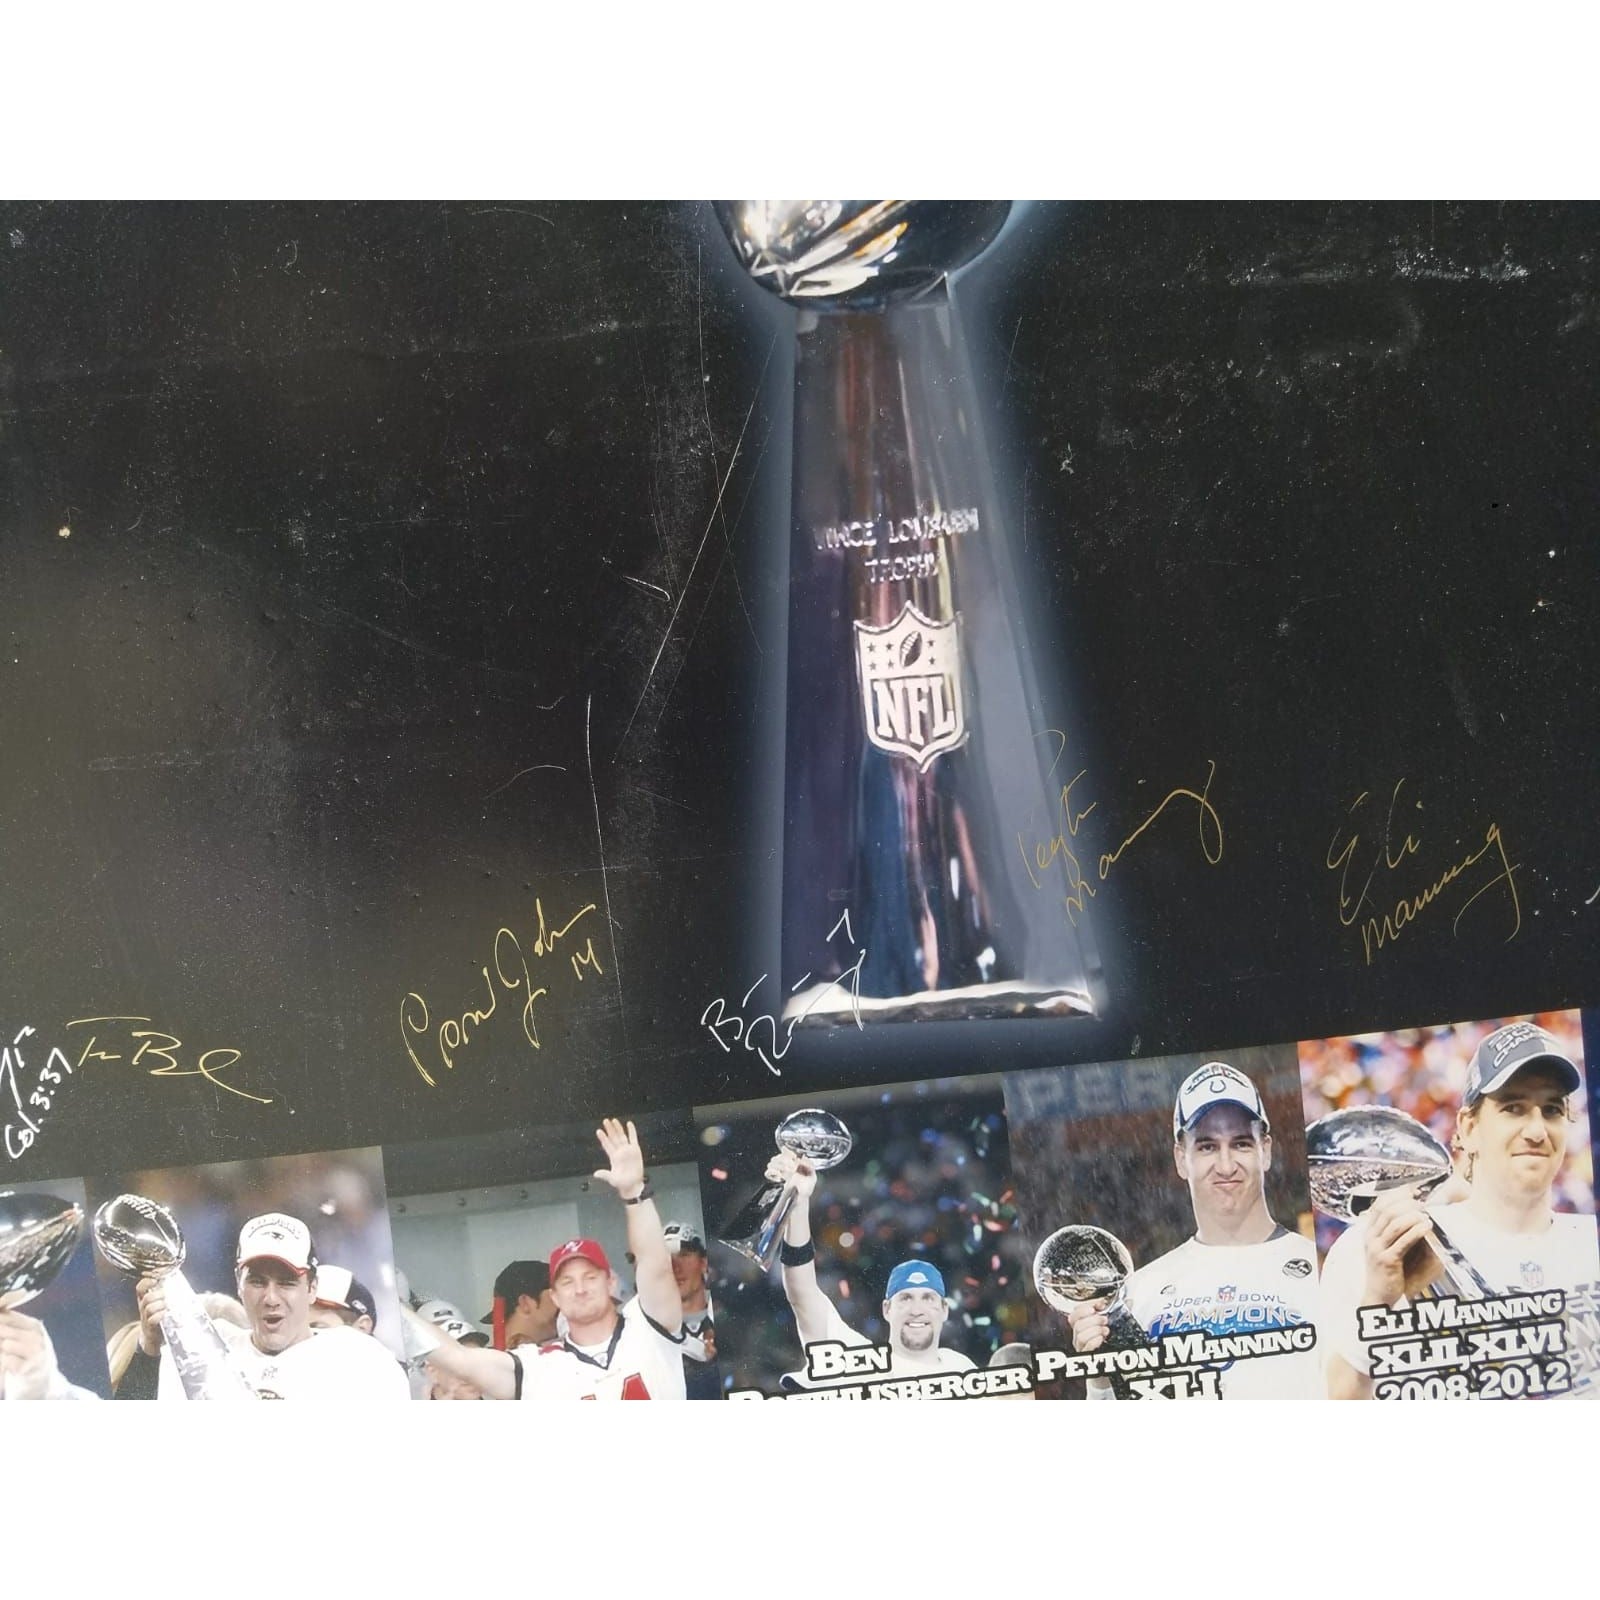 Super Bowl NFL Bart Starr, Joe Namath, Len Dawson 29 Super Bowl winning quarterbacks signed poster with proof